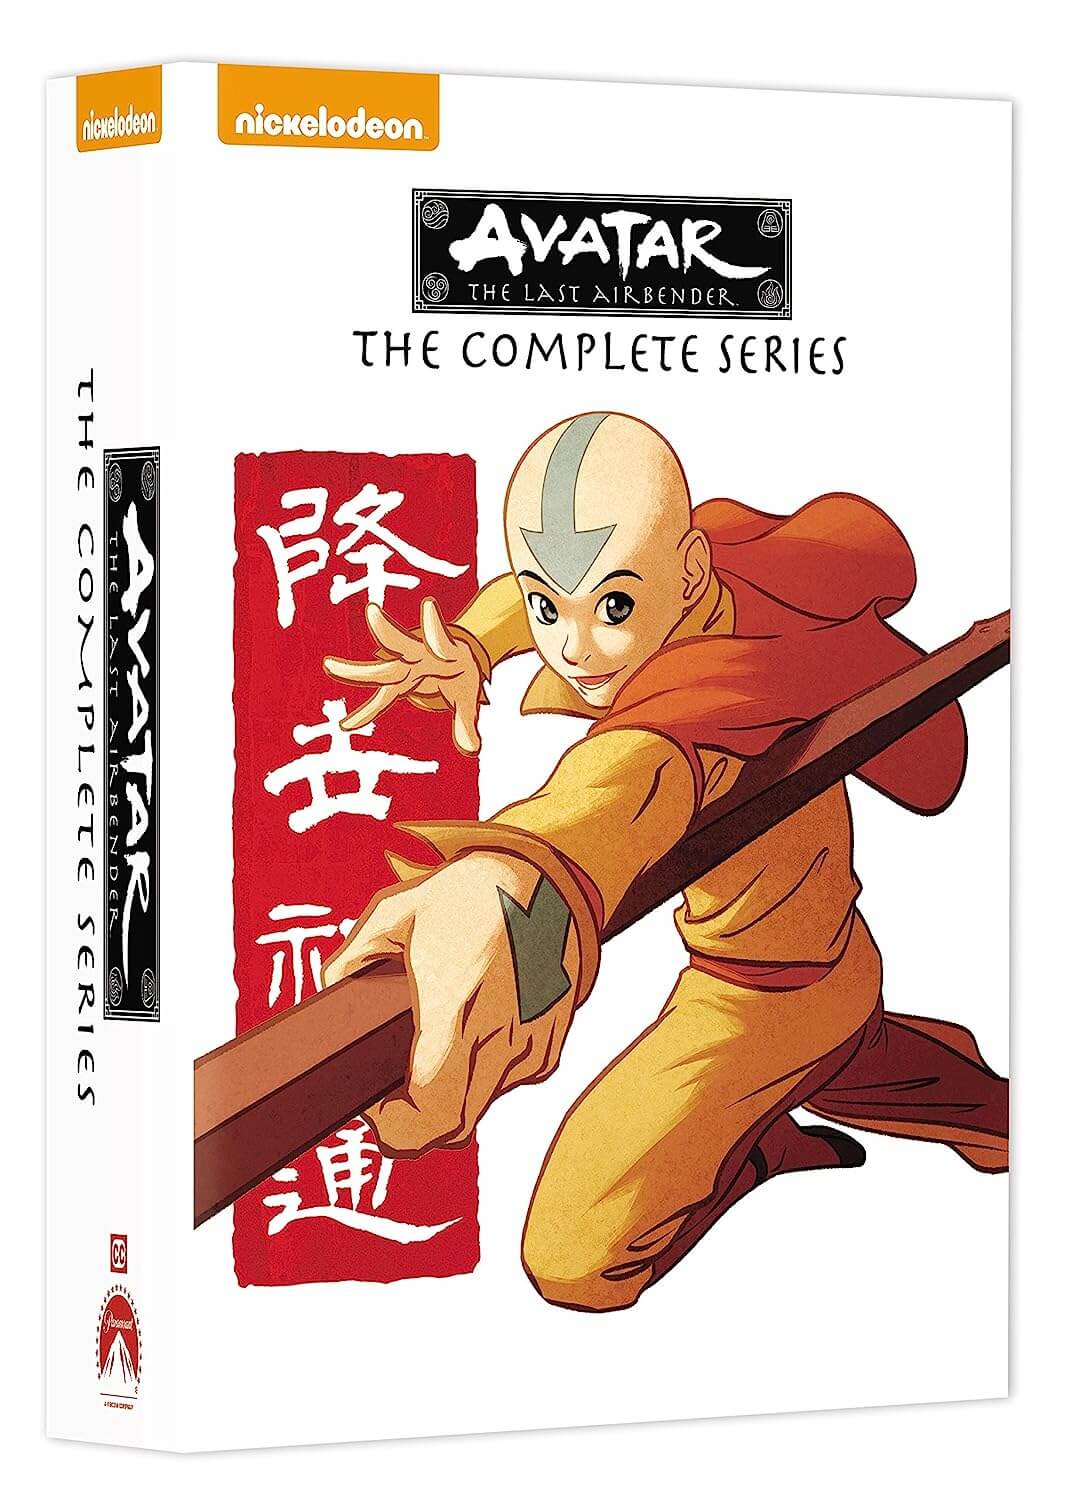 “Avatar: The Last Airbender” (2005 - 2008)